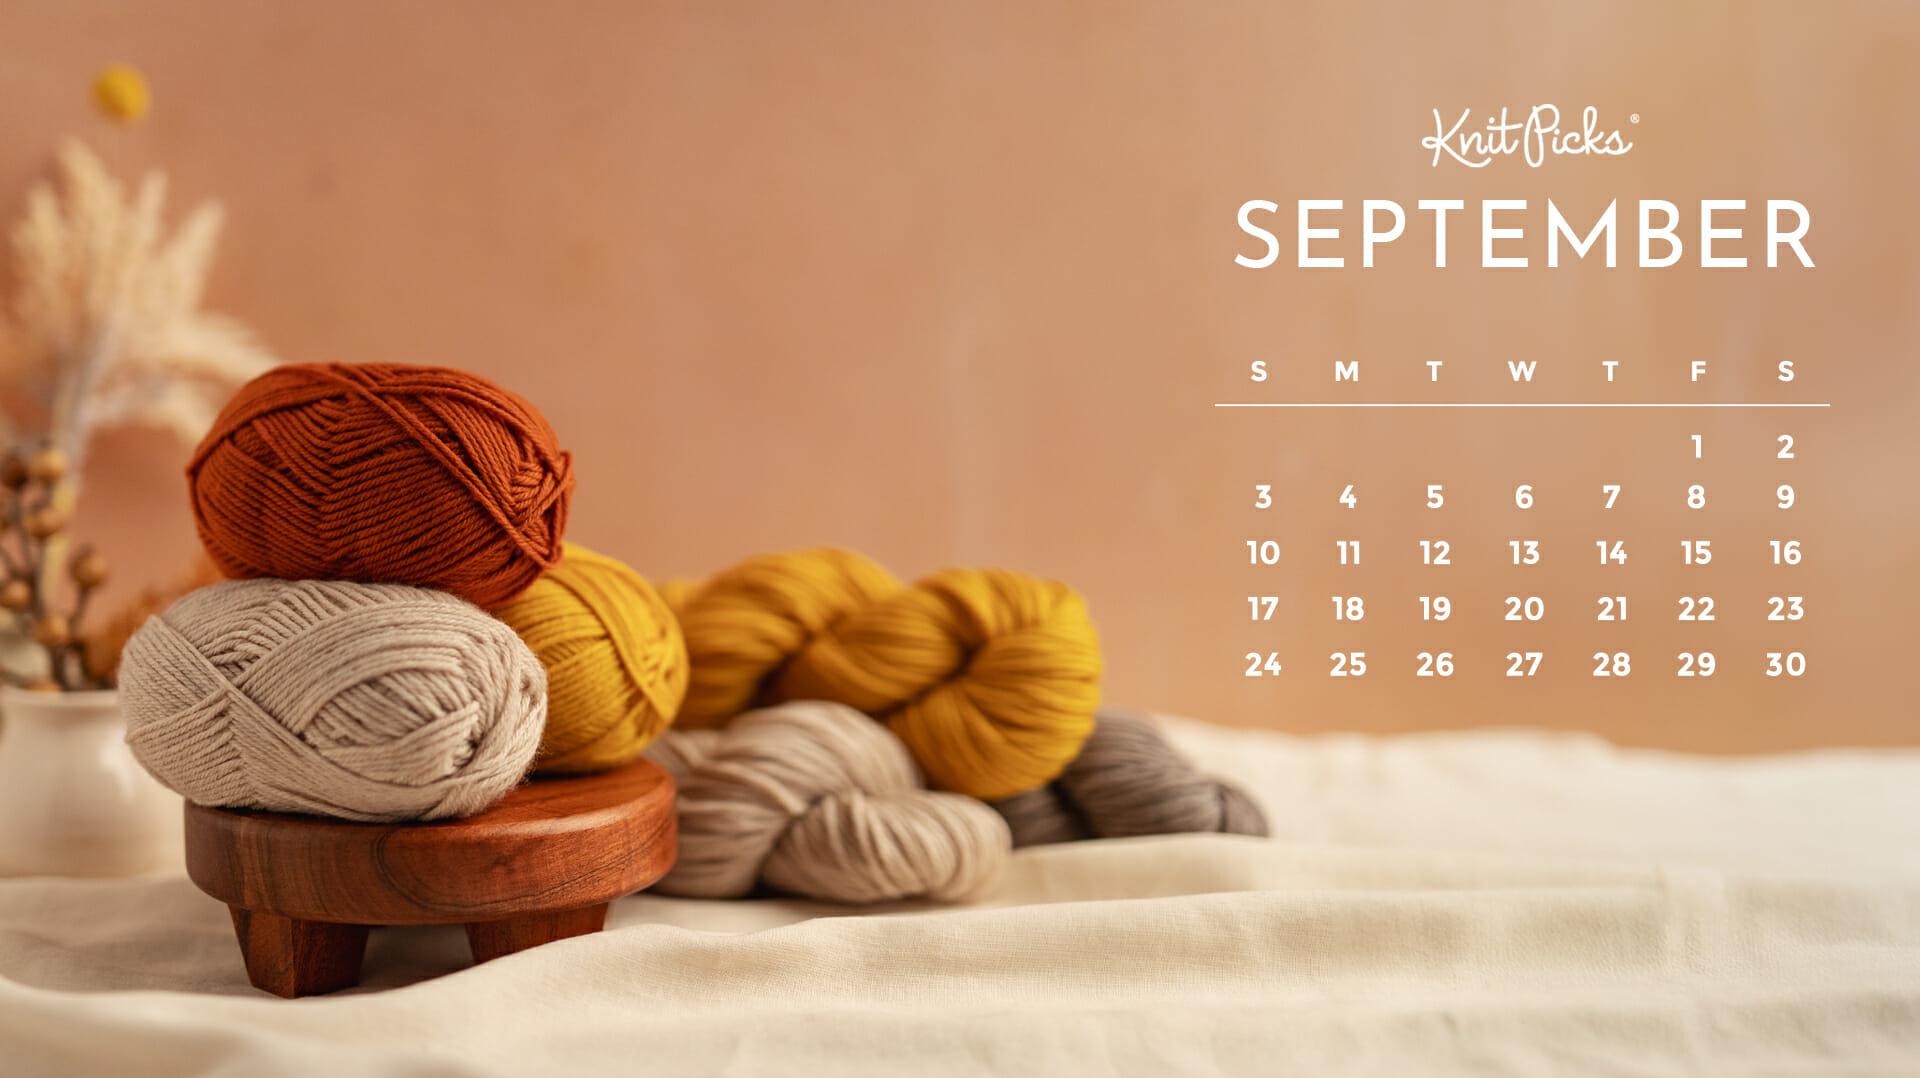 Able September Calendar The Knit Picks Staff